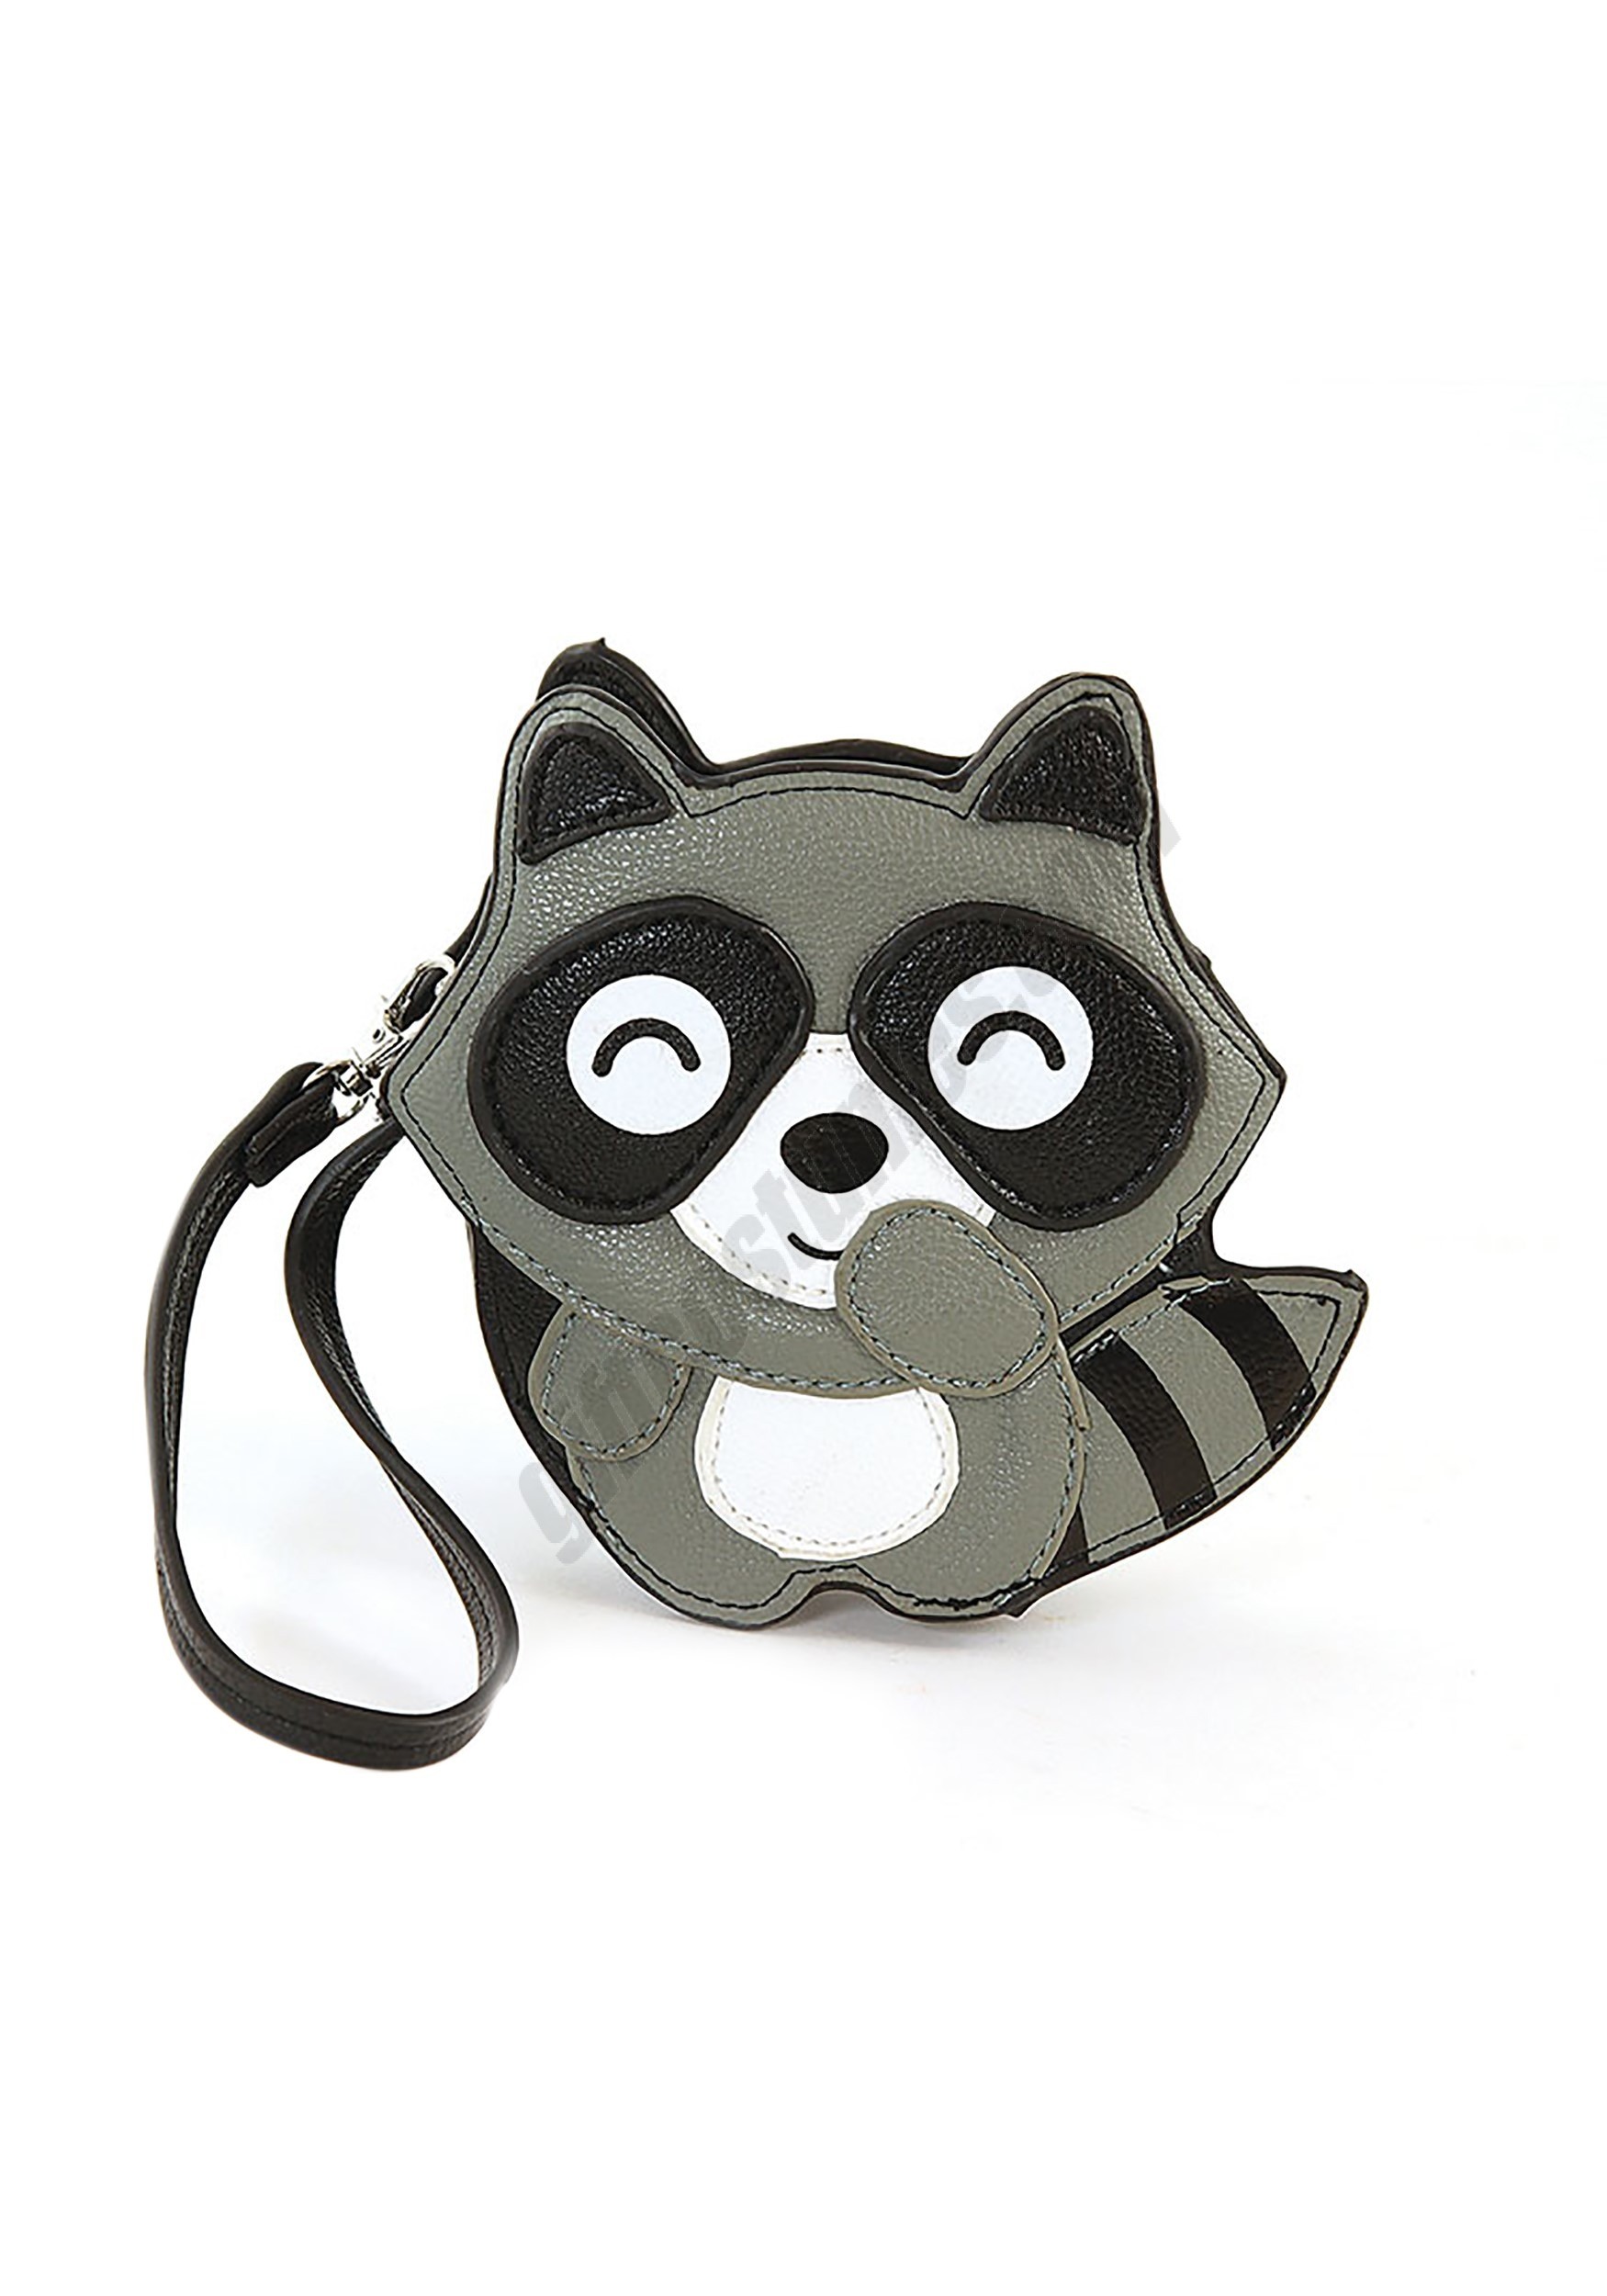 Raccoon Wristlet Bag Promotions - Raccoon Wristlet Bag Promotions